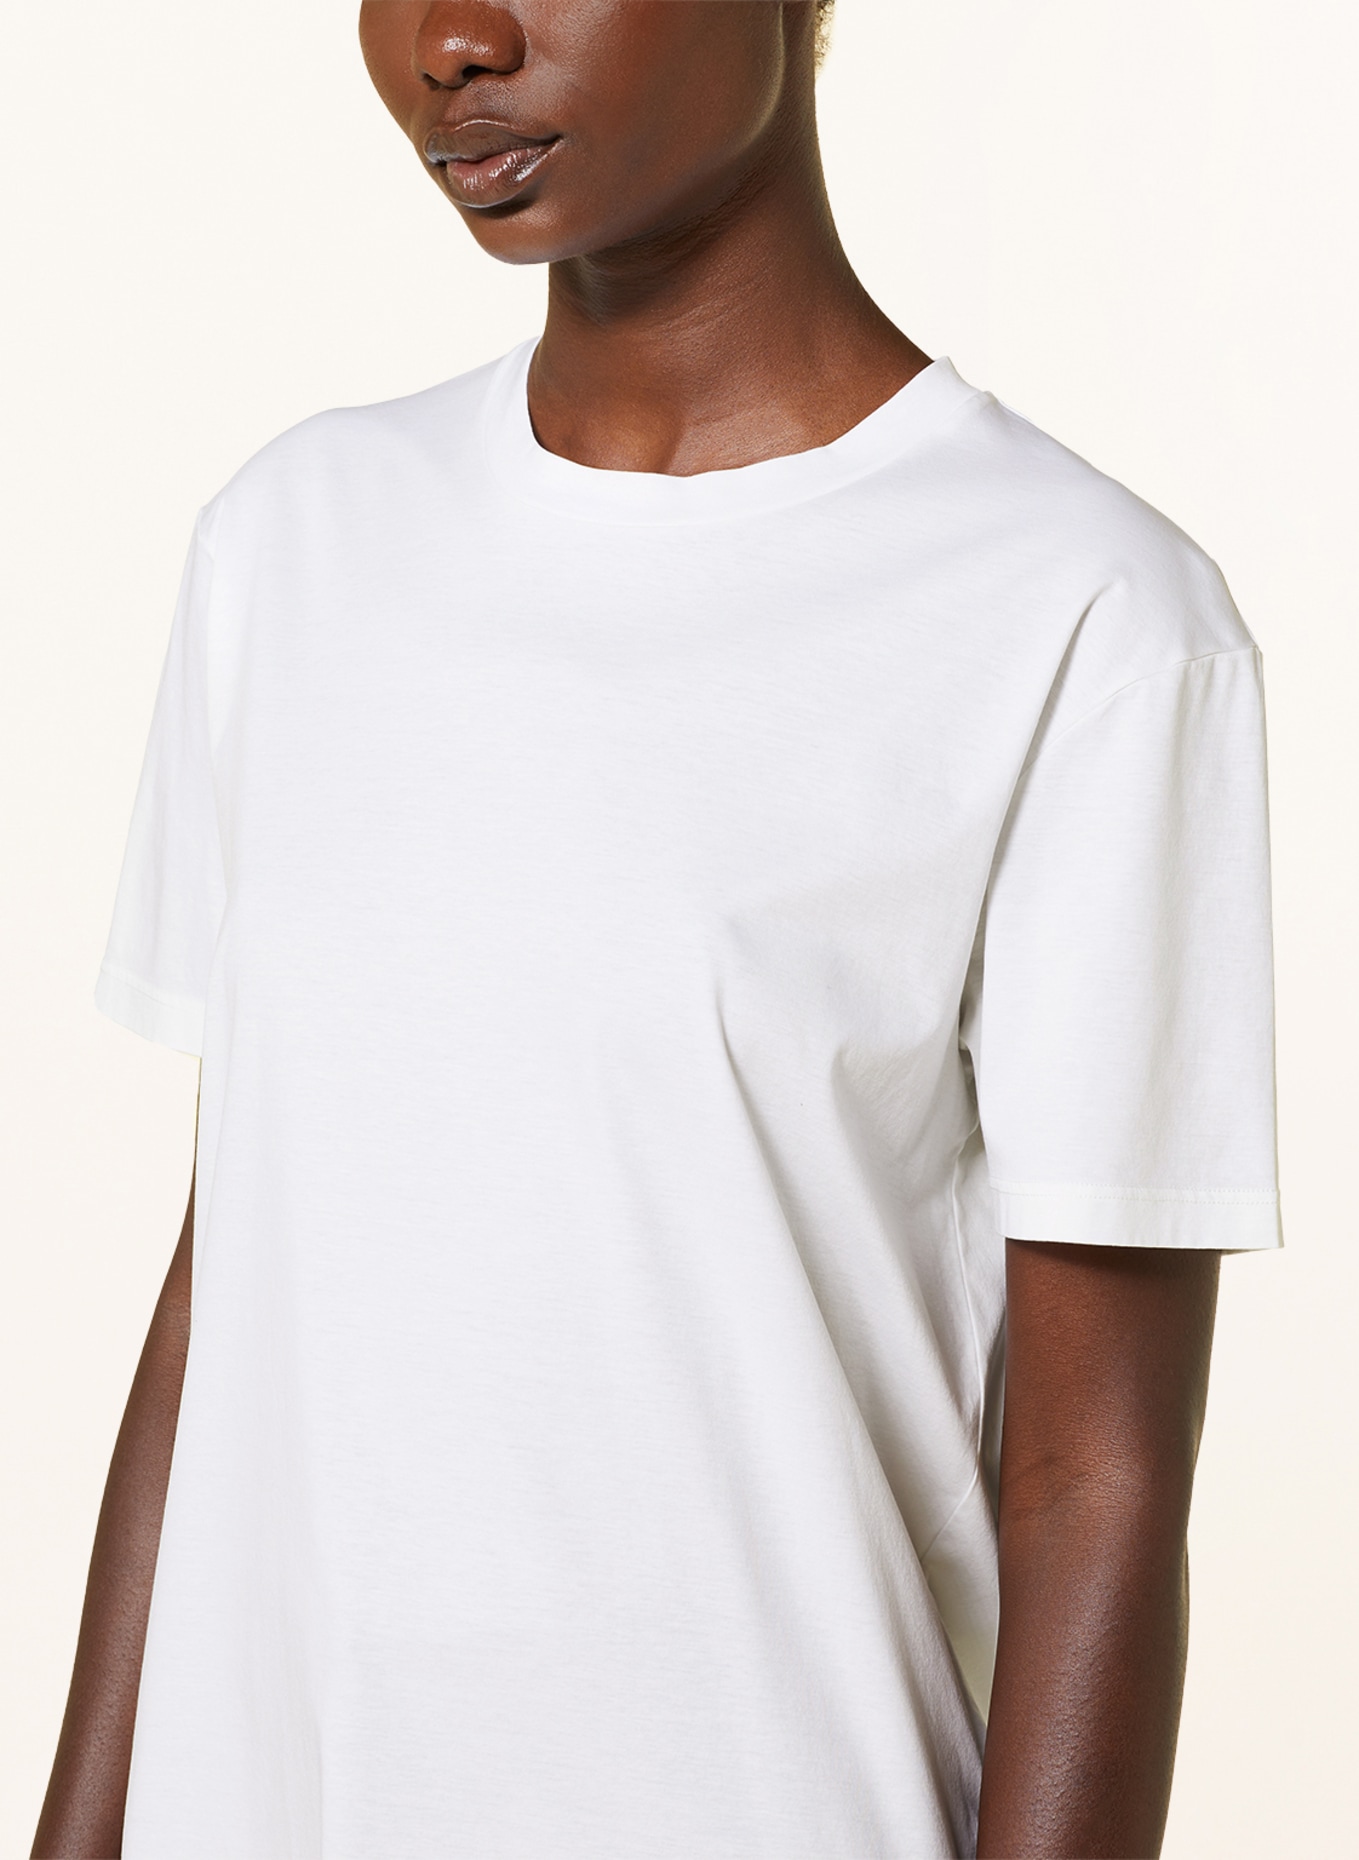 JIL SANDER T-shirt, Color: WHITE (Image 4)